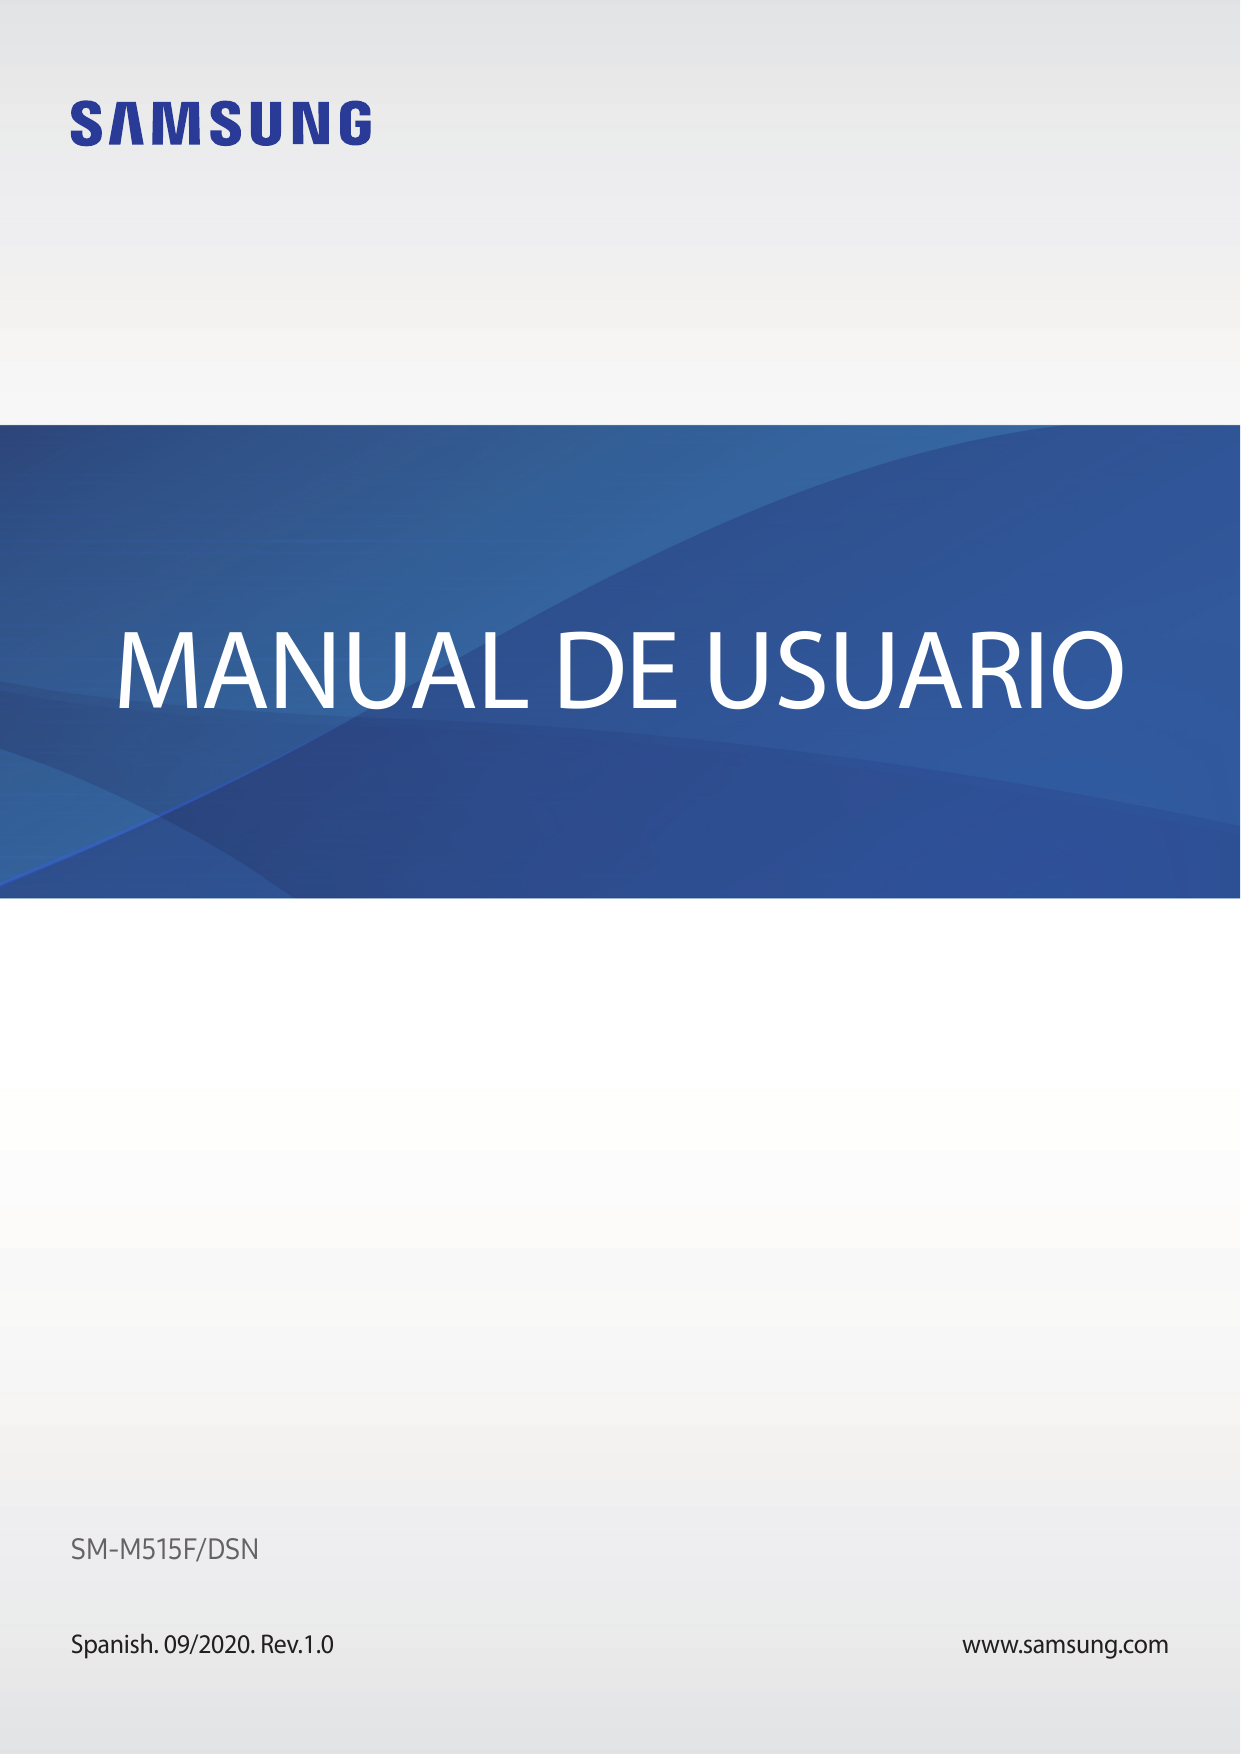 MANUAL DE USUARIOSM-M515F/DSNSpanish. 09/2020. Rev.1.0www.samsung.com